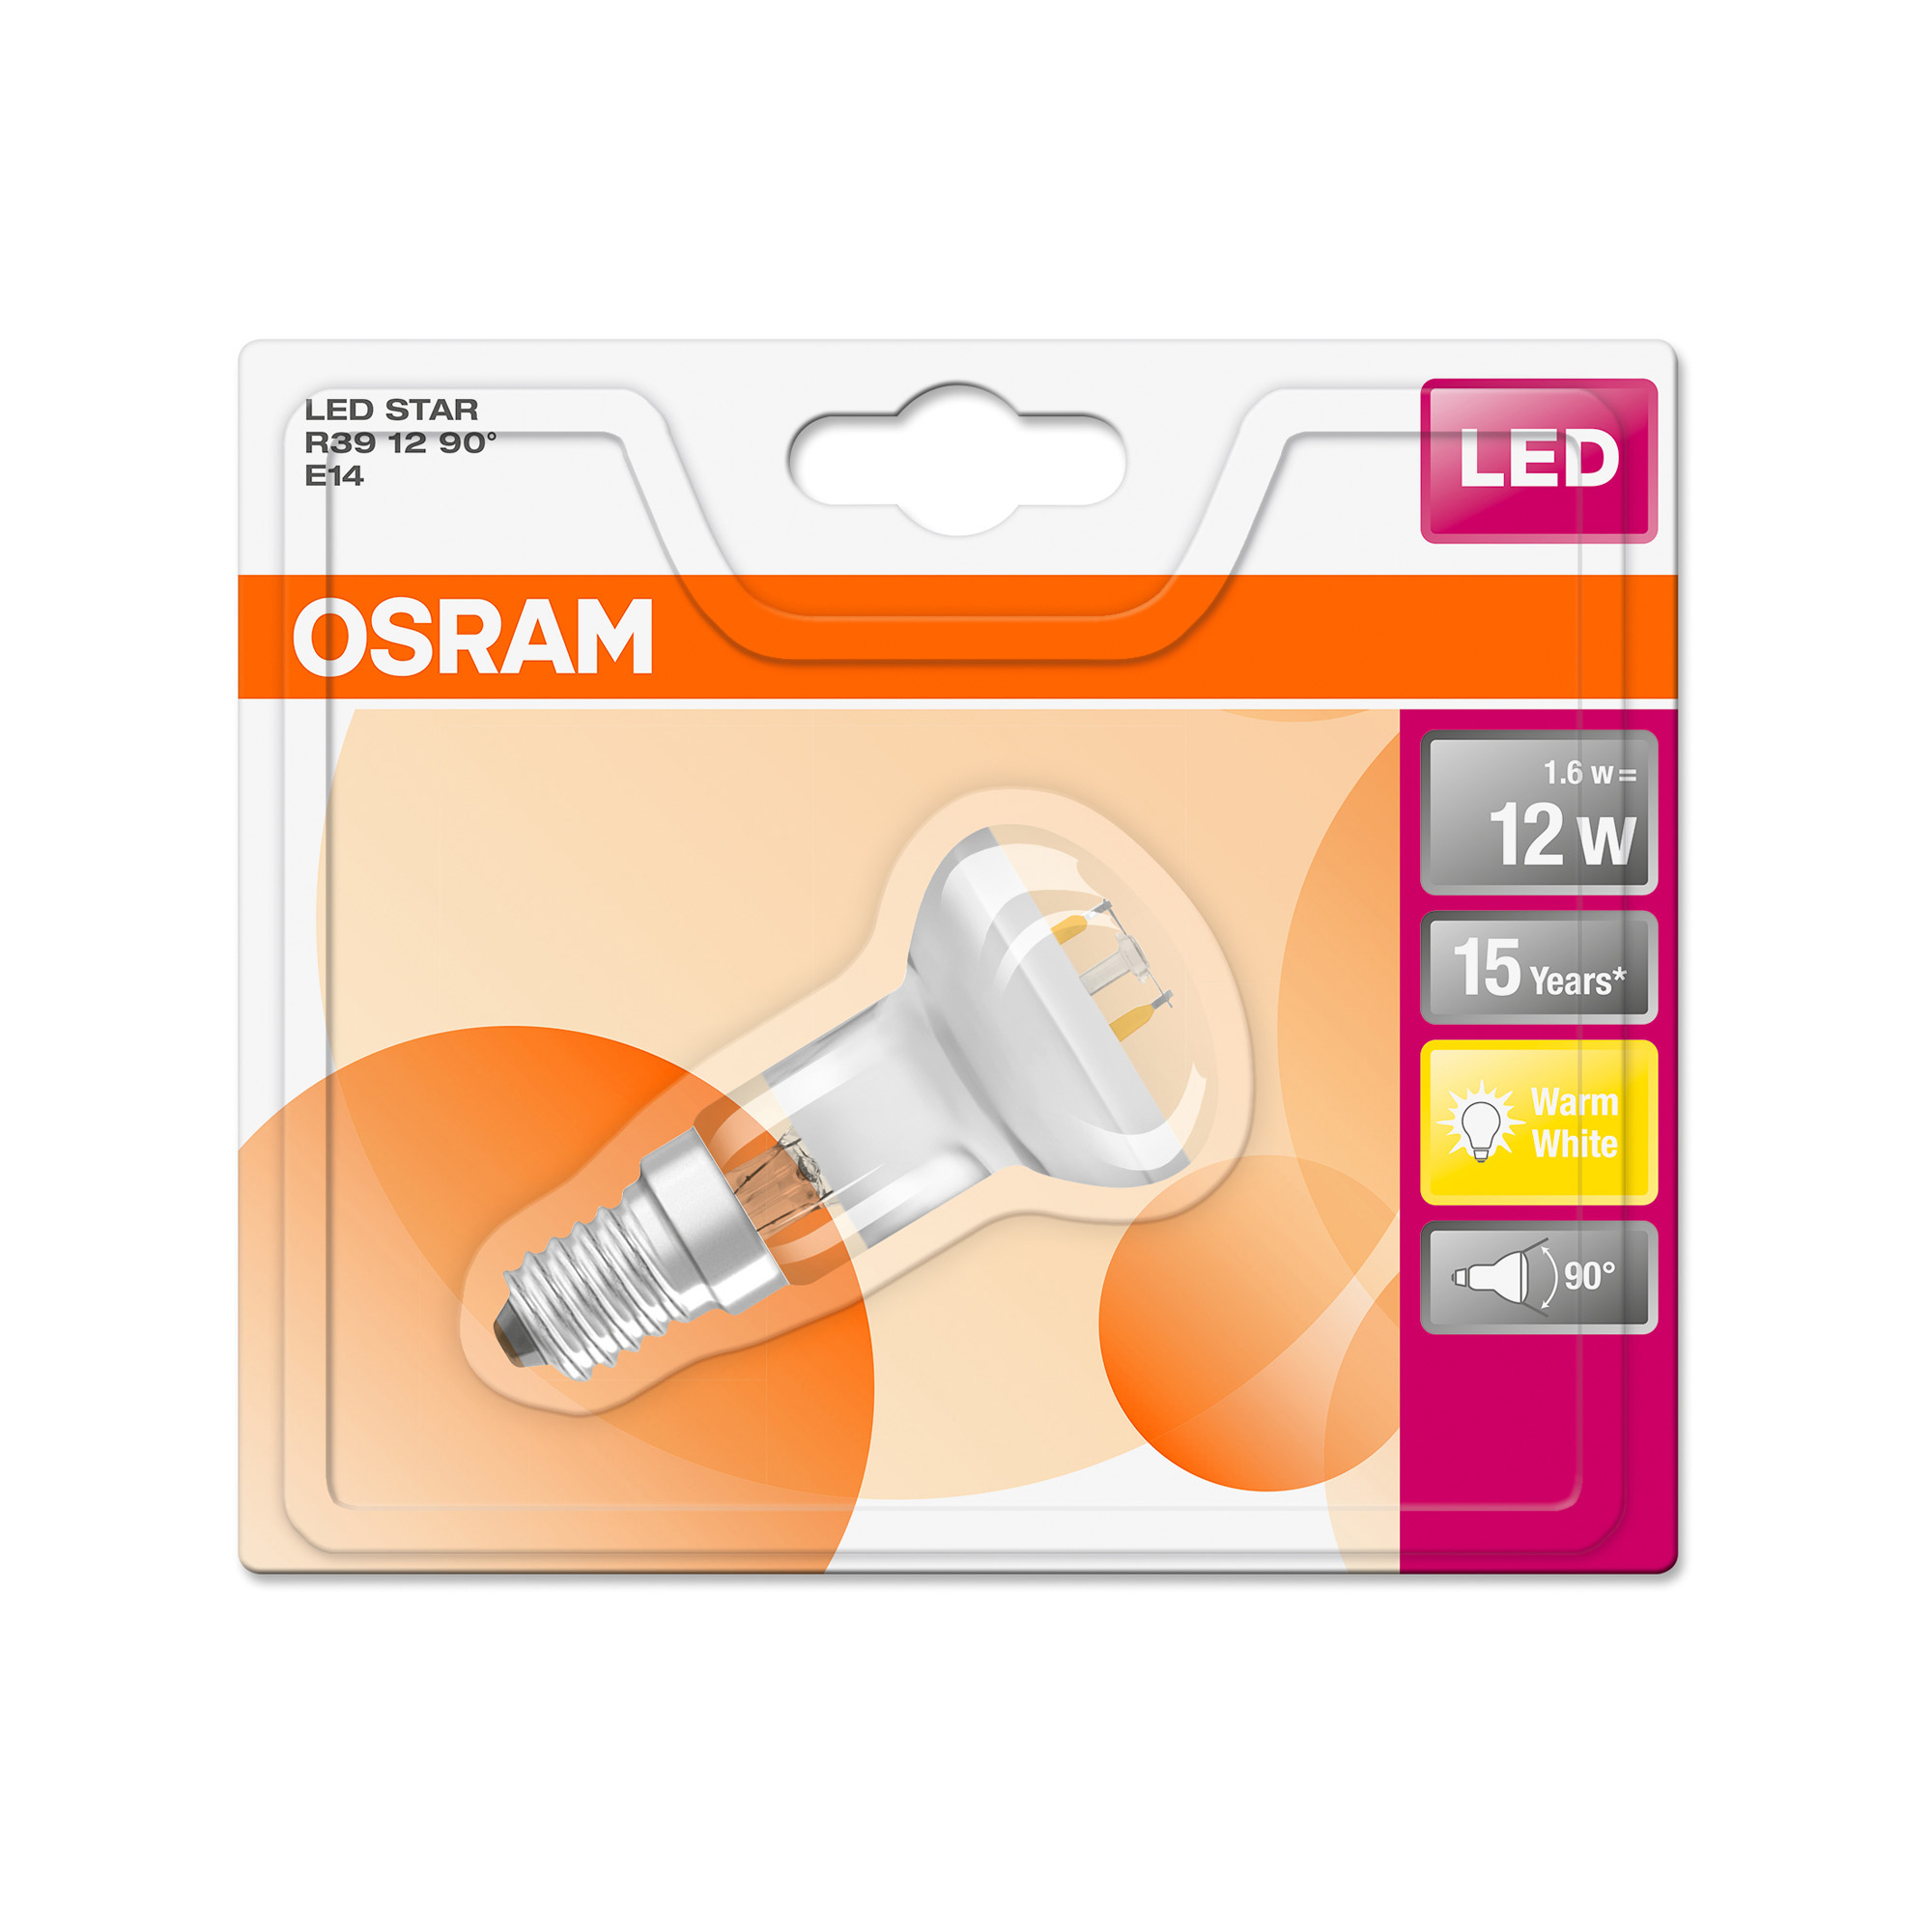 Osram LED STAR R39 25 non-dim 1,6W 827 E14 2700K 110lm